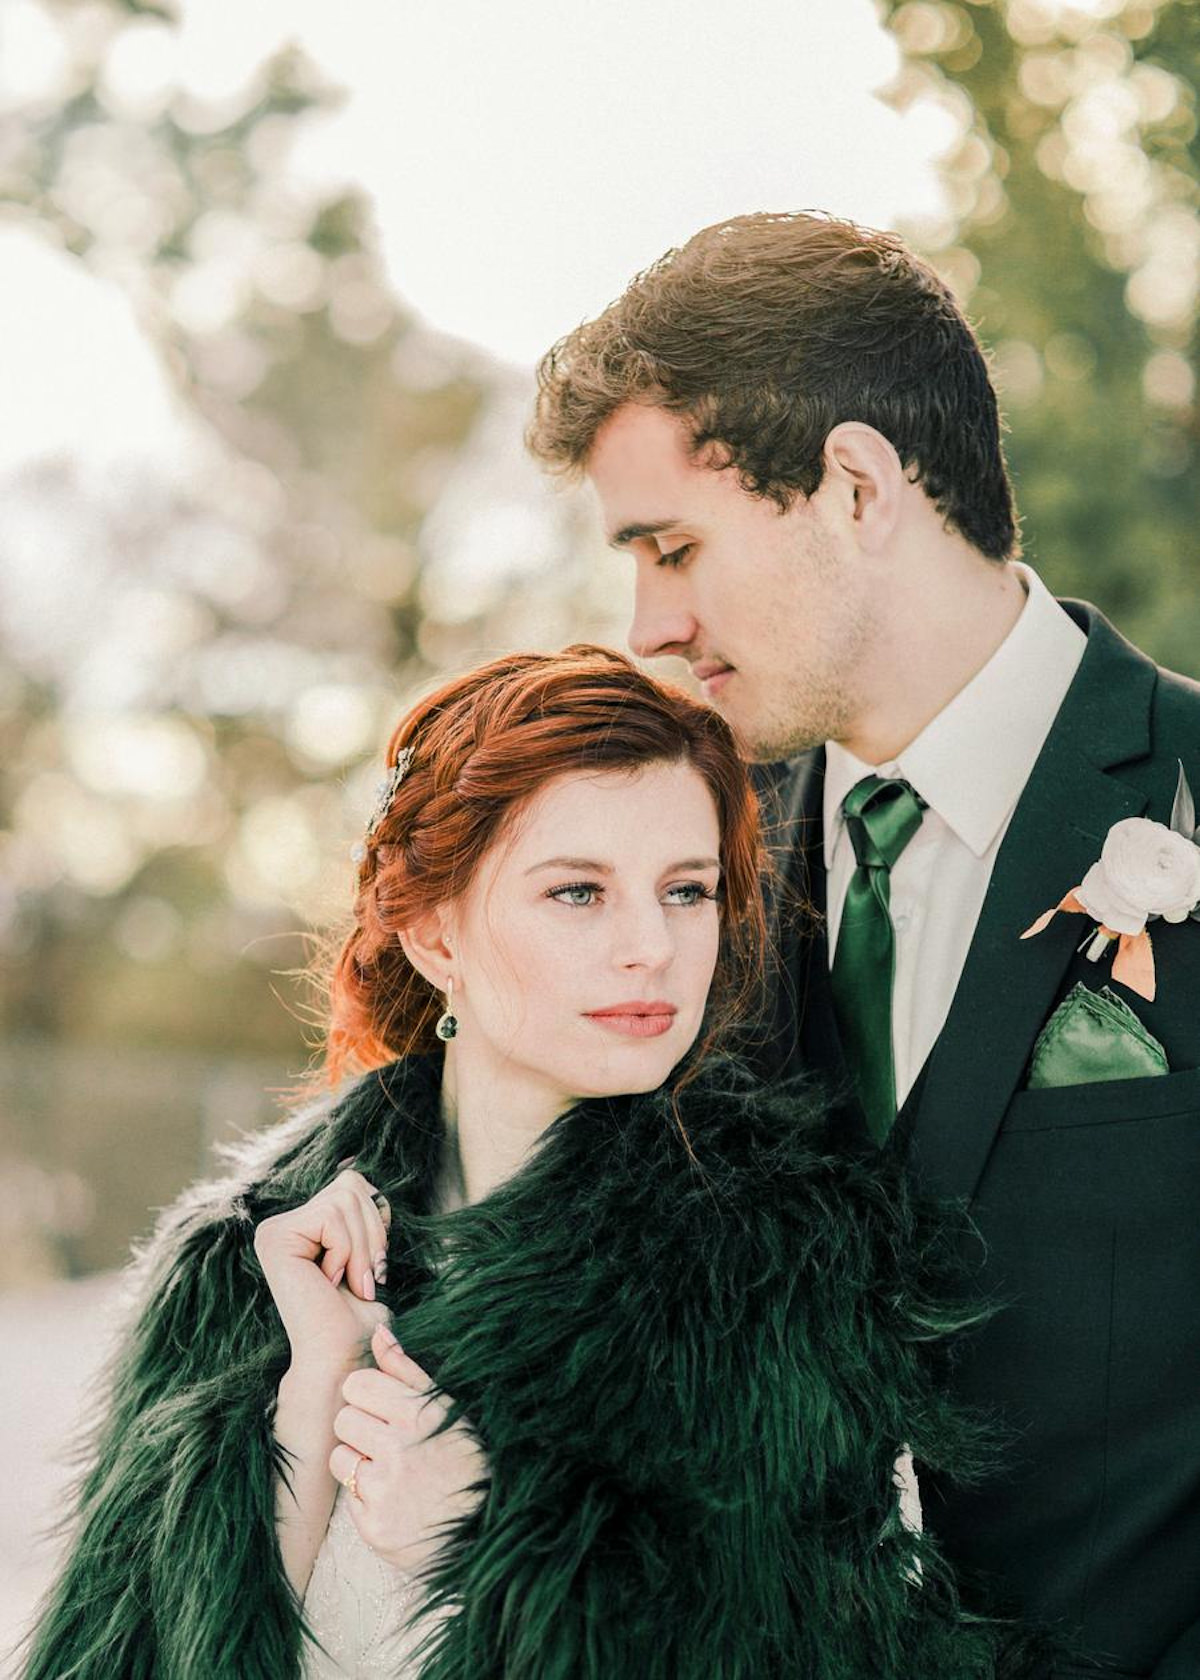 Emerald Green wedding inspiration - fall wedding colors - Photo: Kristiann Photography